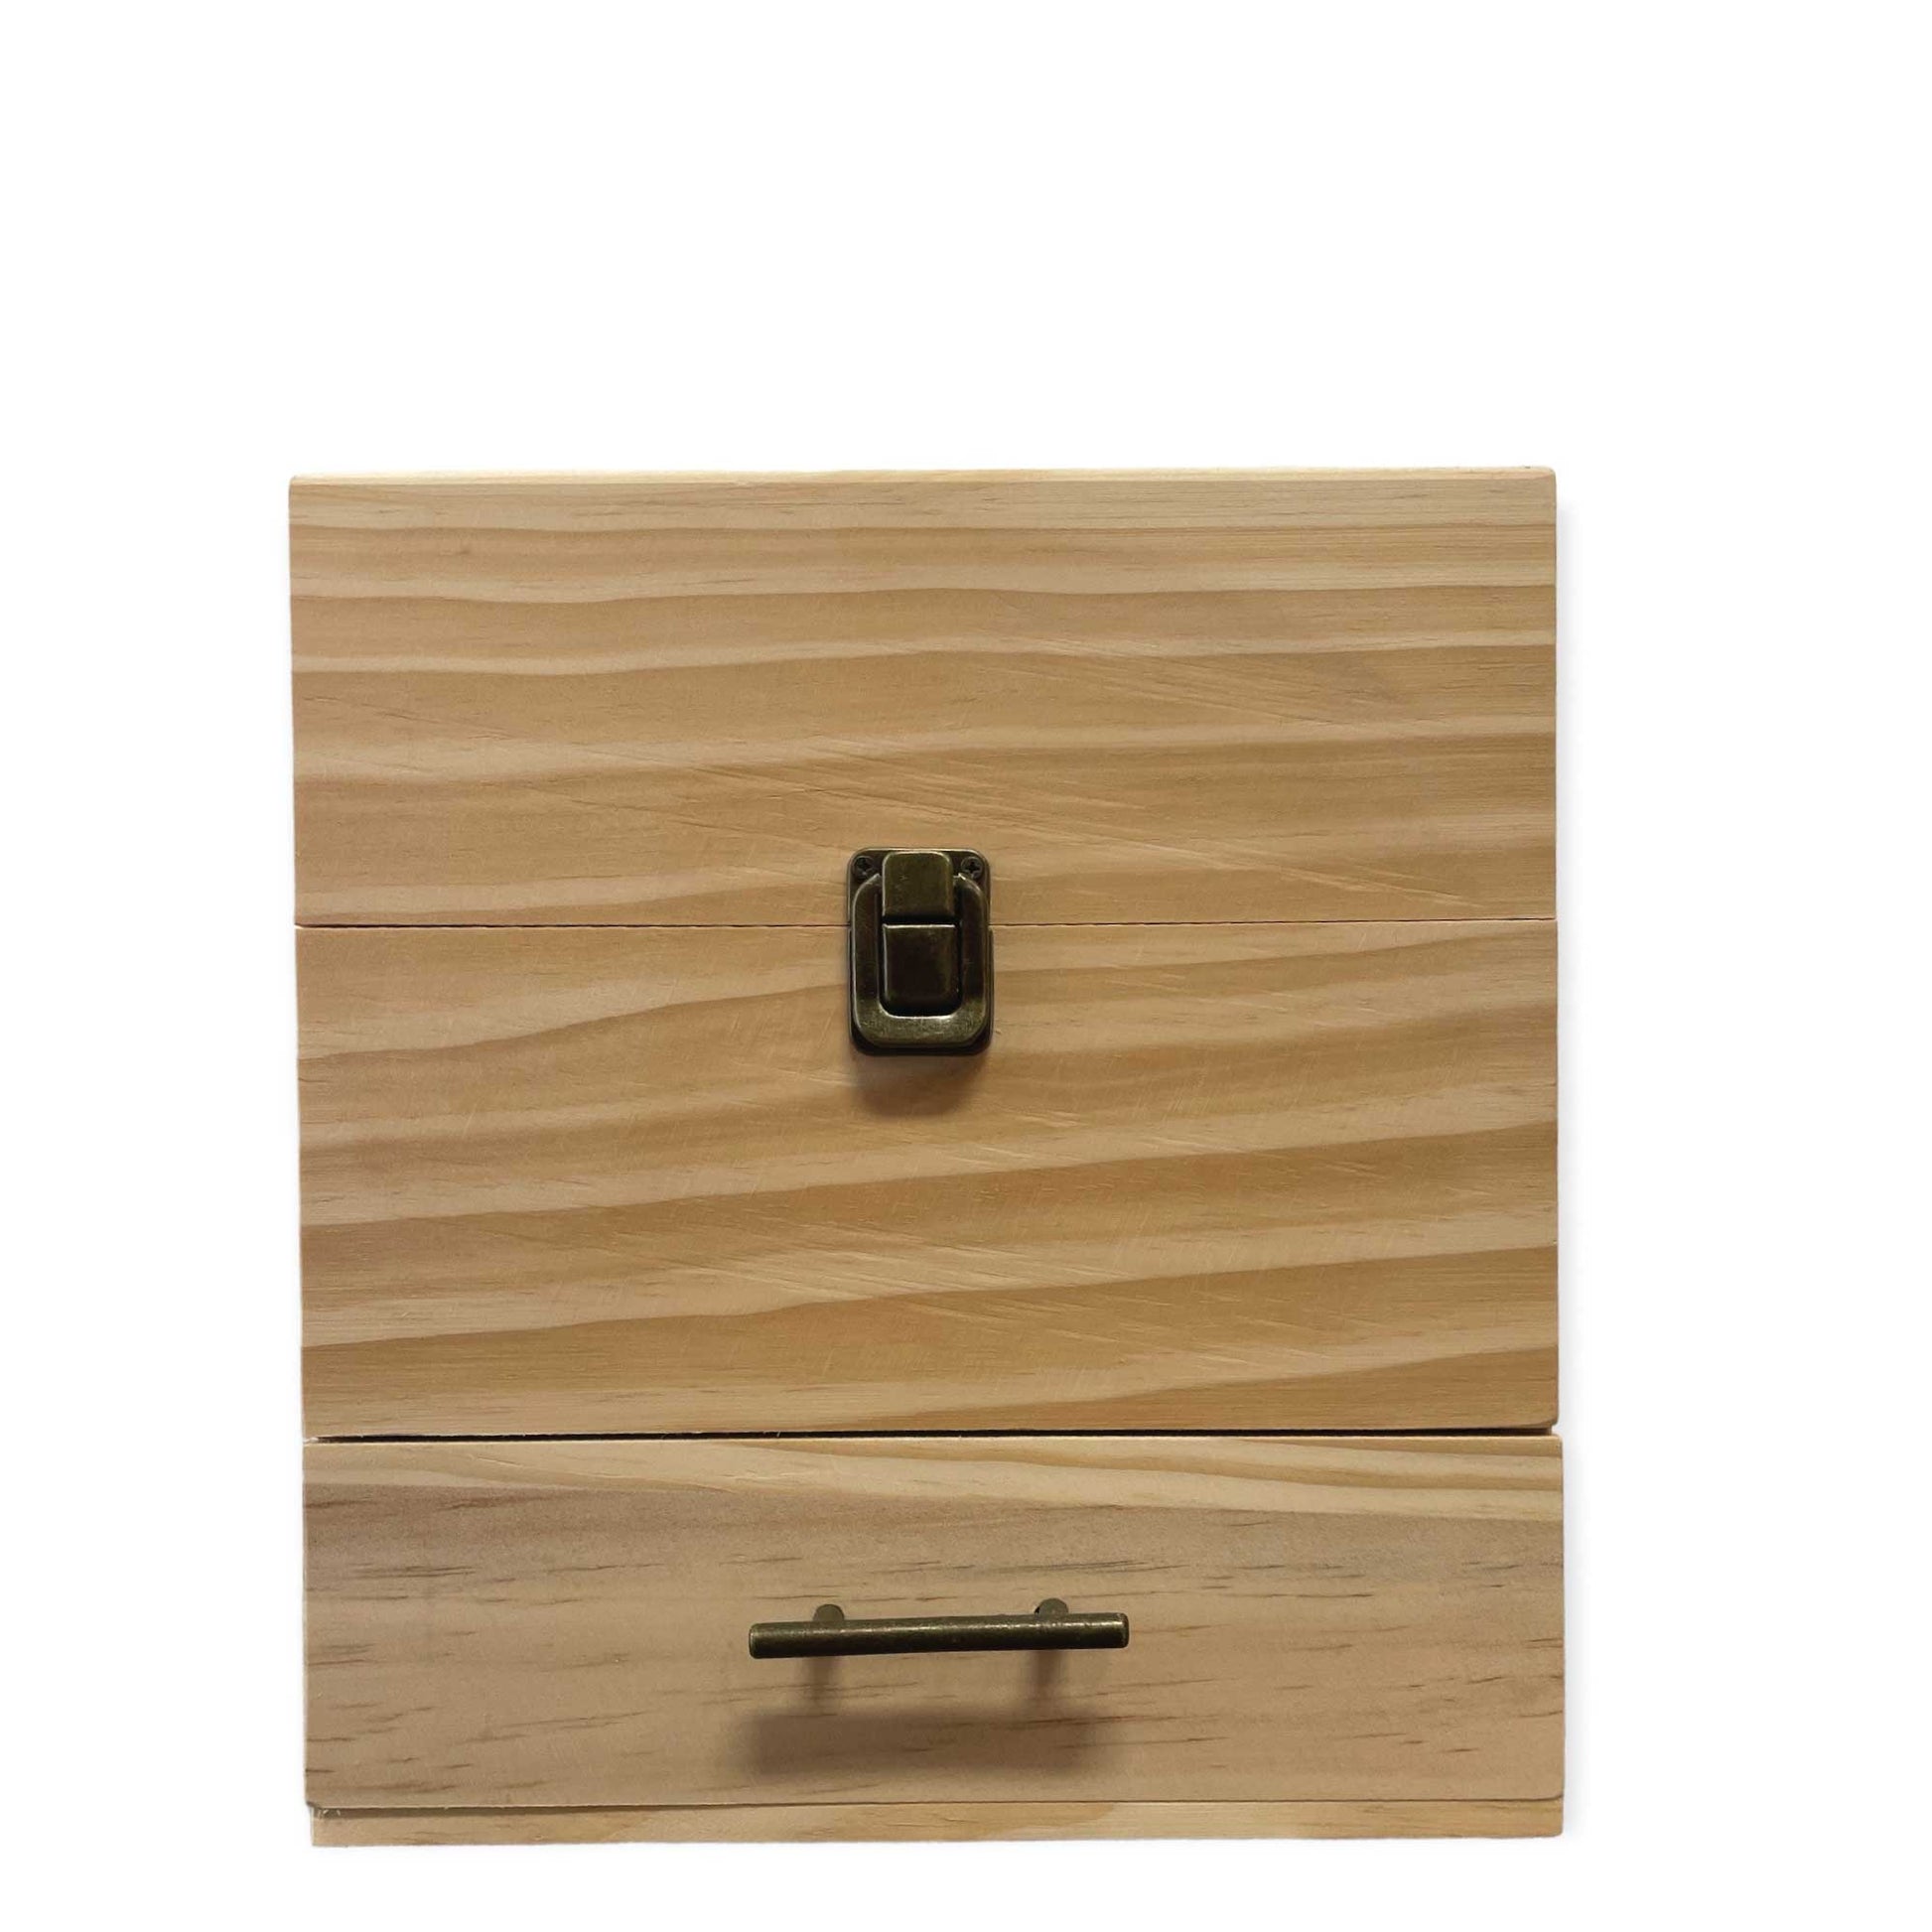 Essential Oils Wood Storage Box - Wooden Oil Bottle Slots